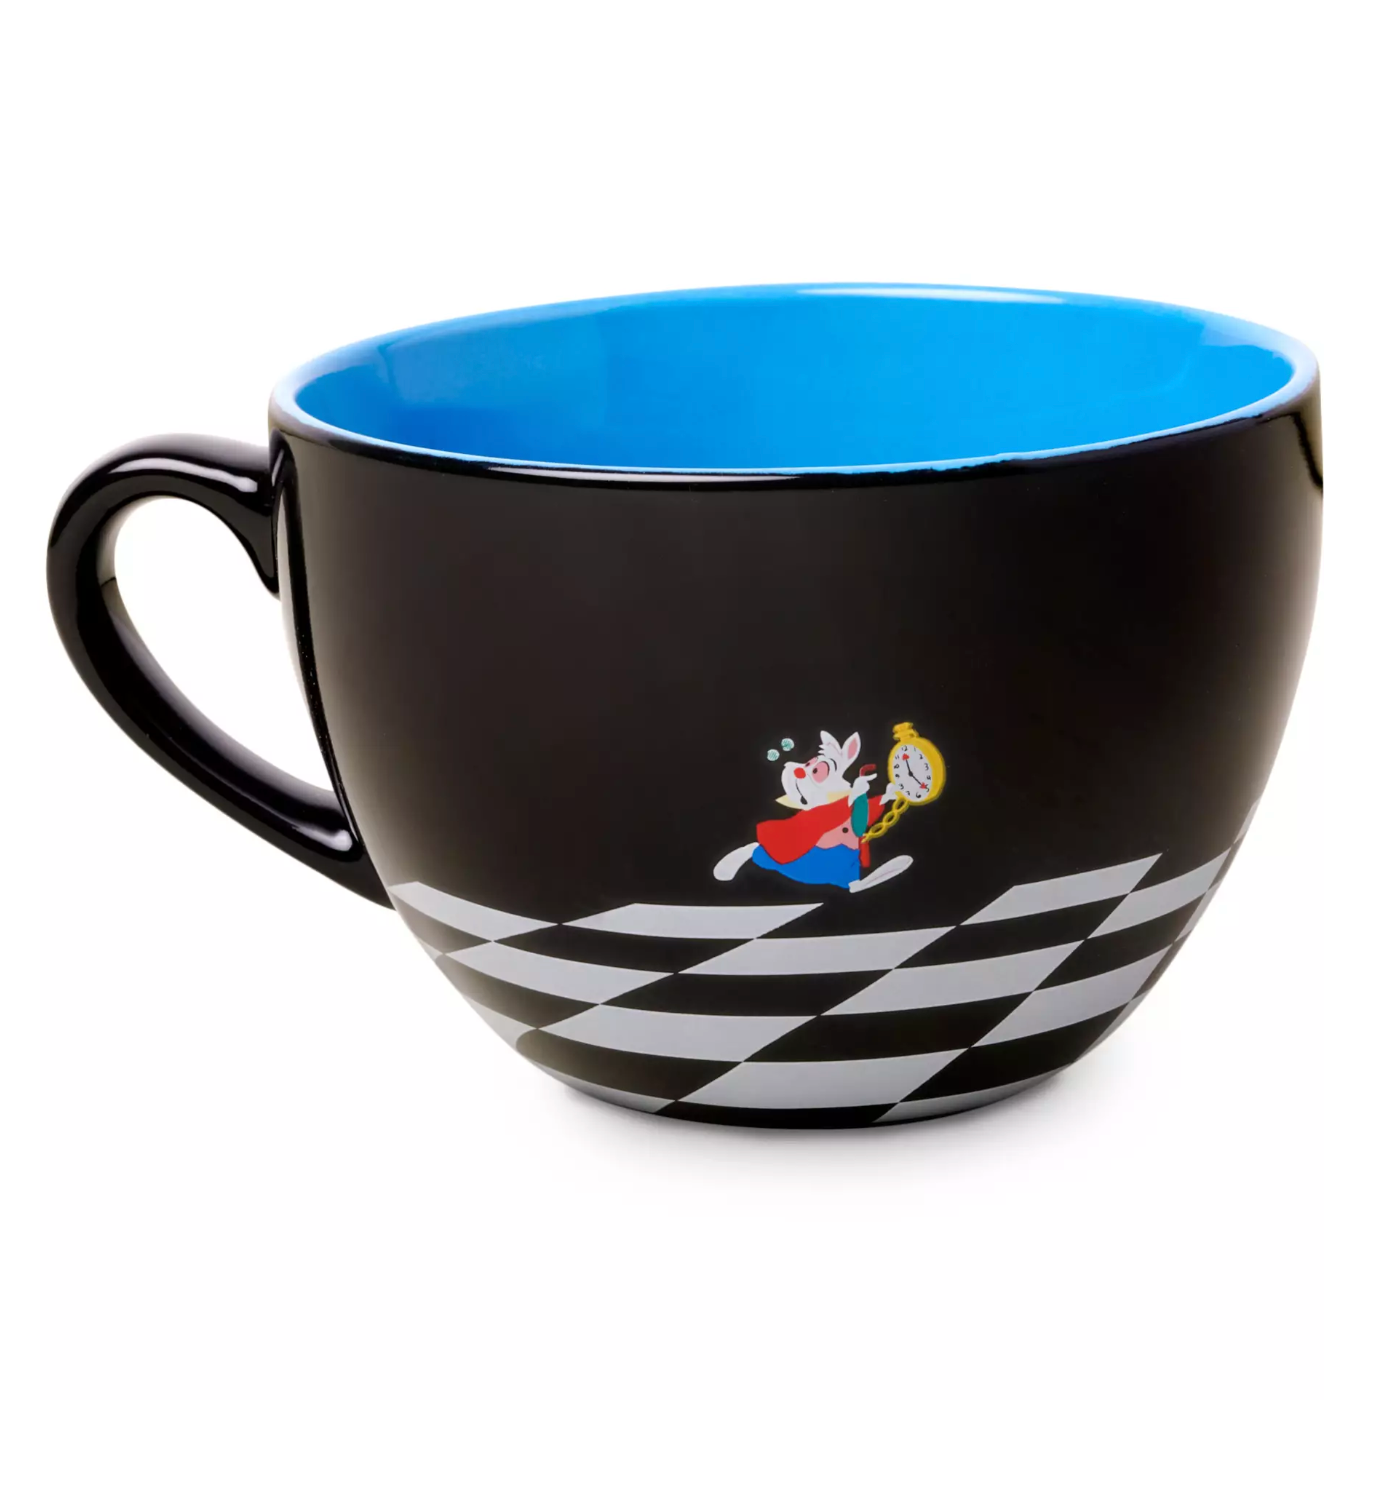 Disney Parks Alice in Wonderland Mug, Saucer and Tea Infuser Set New with Box